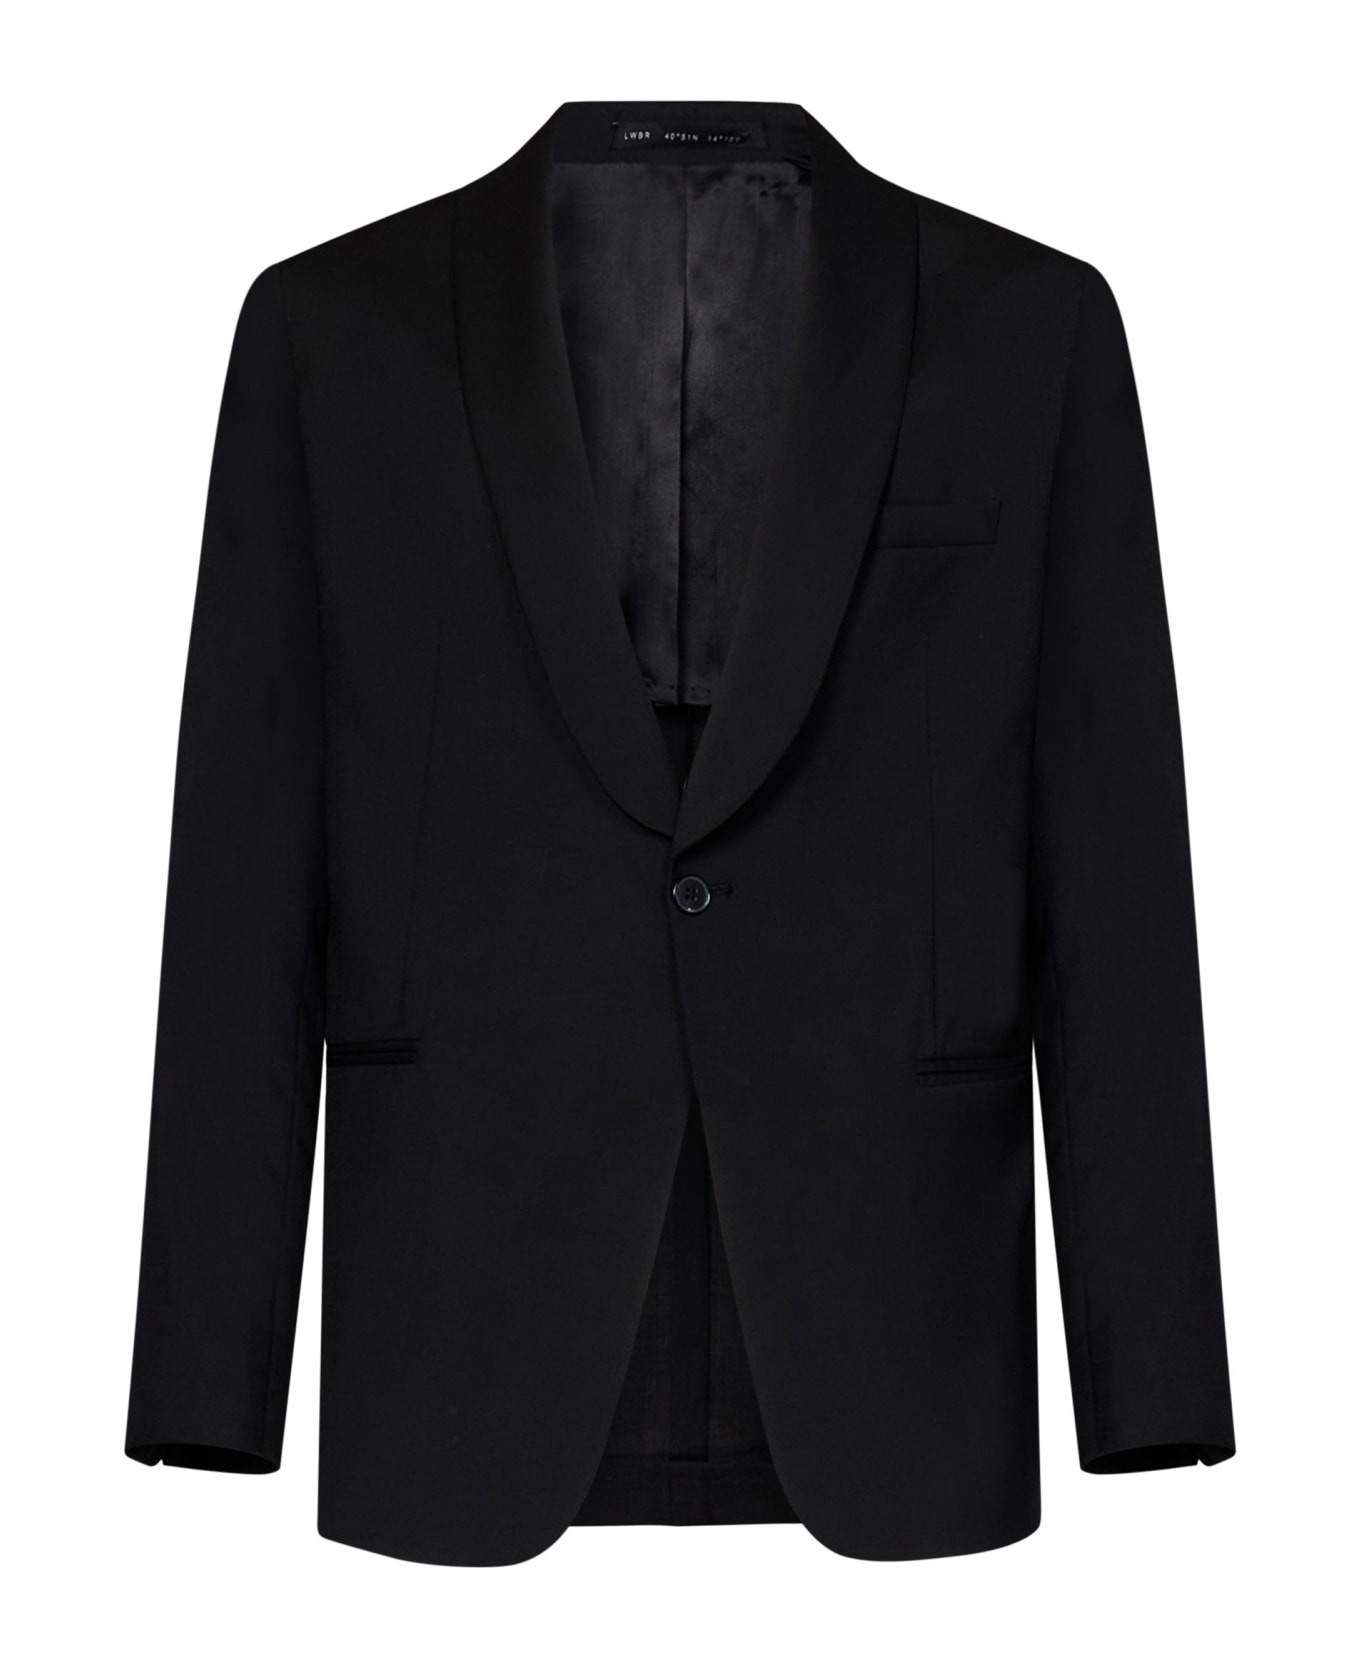 Low Brand 1b Evening Suit - Black